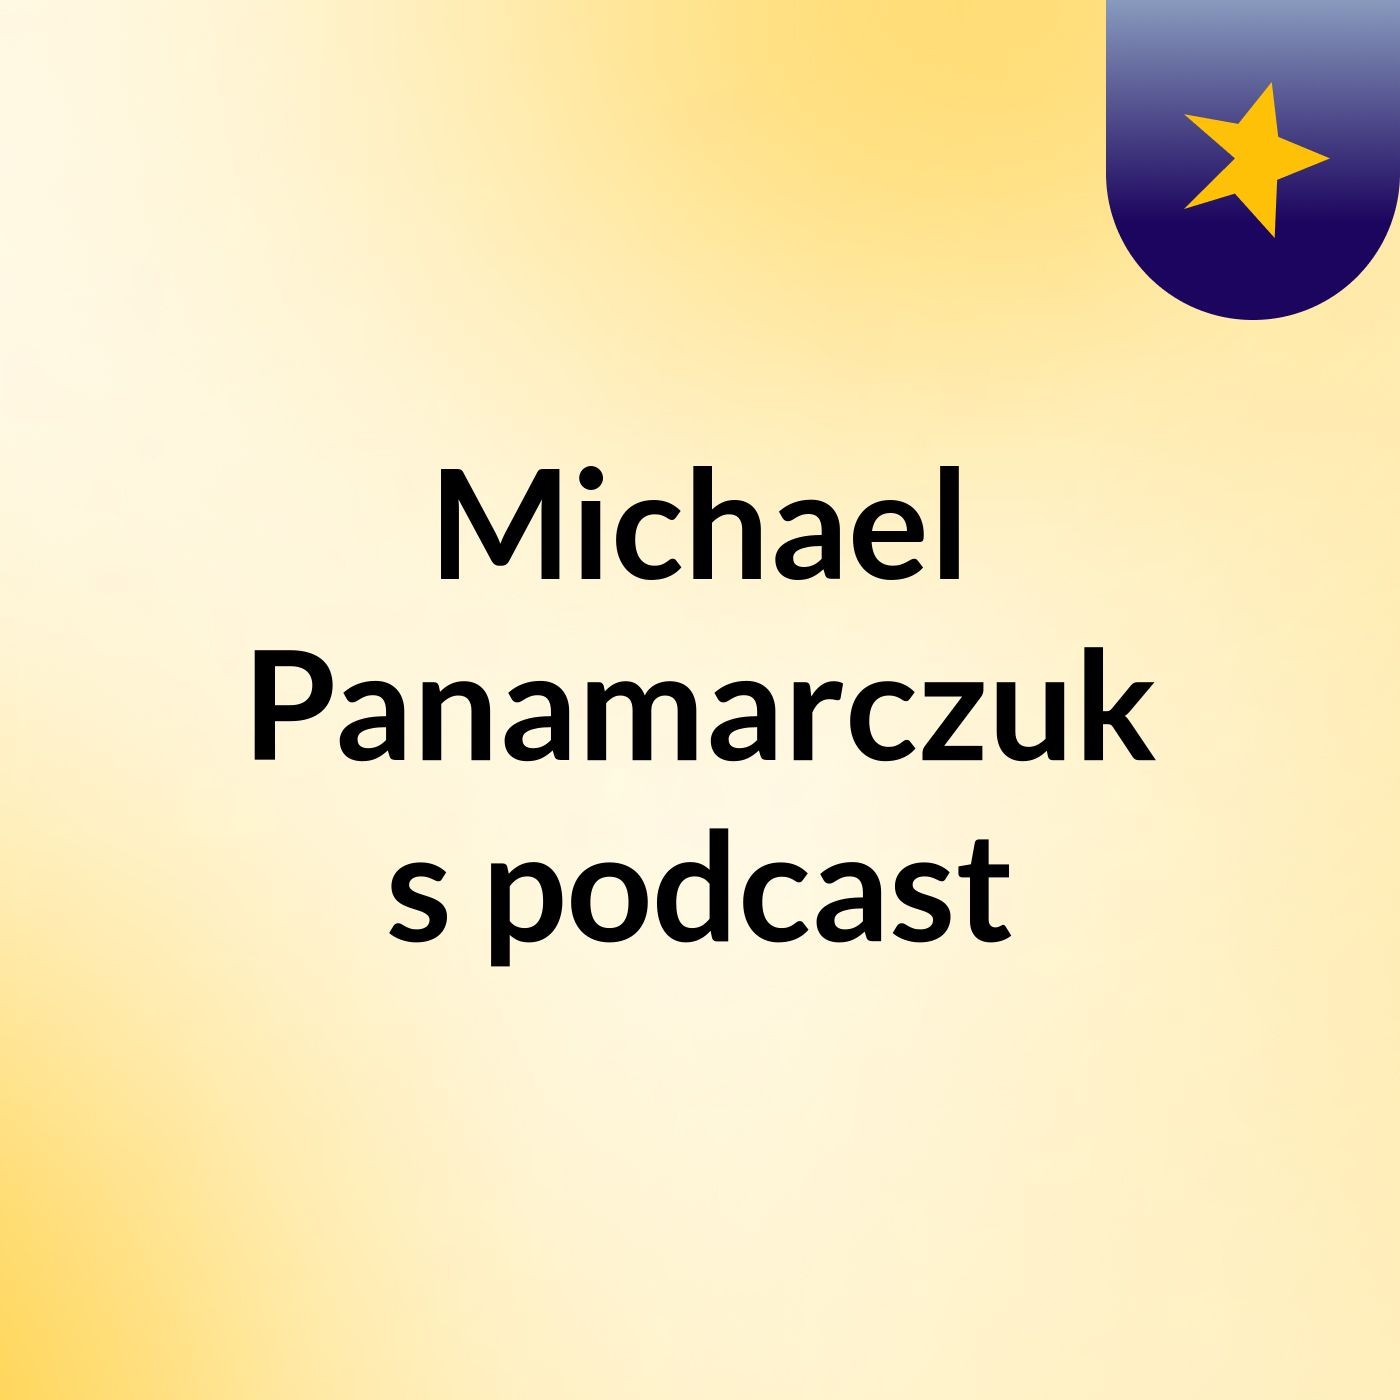 Episode 7 - Michael Panamarczuk's podcast